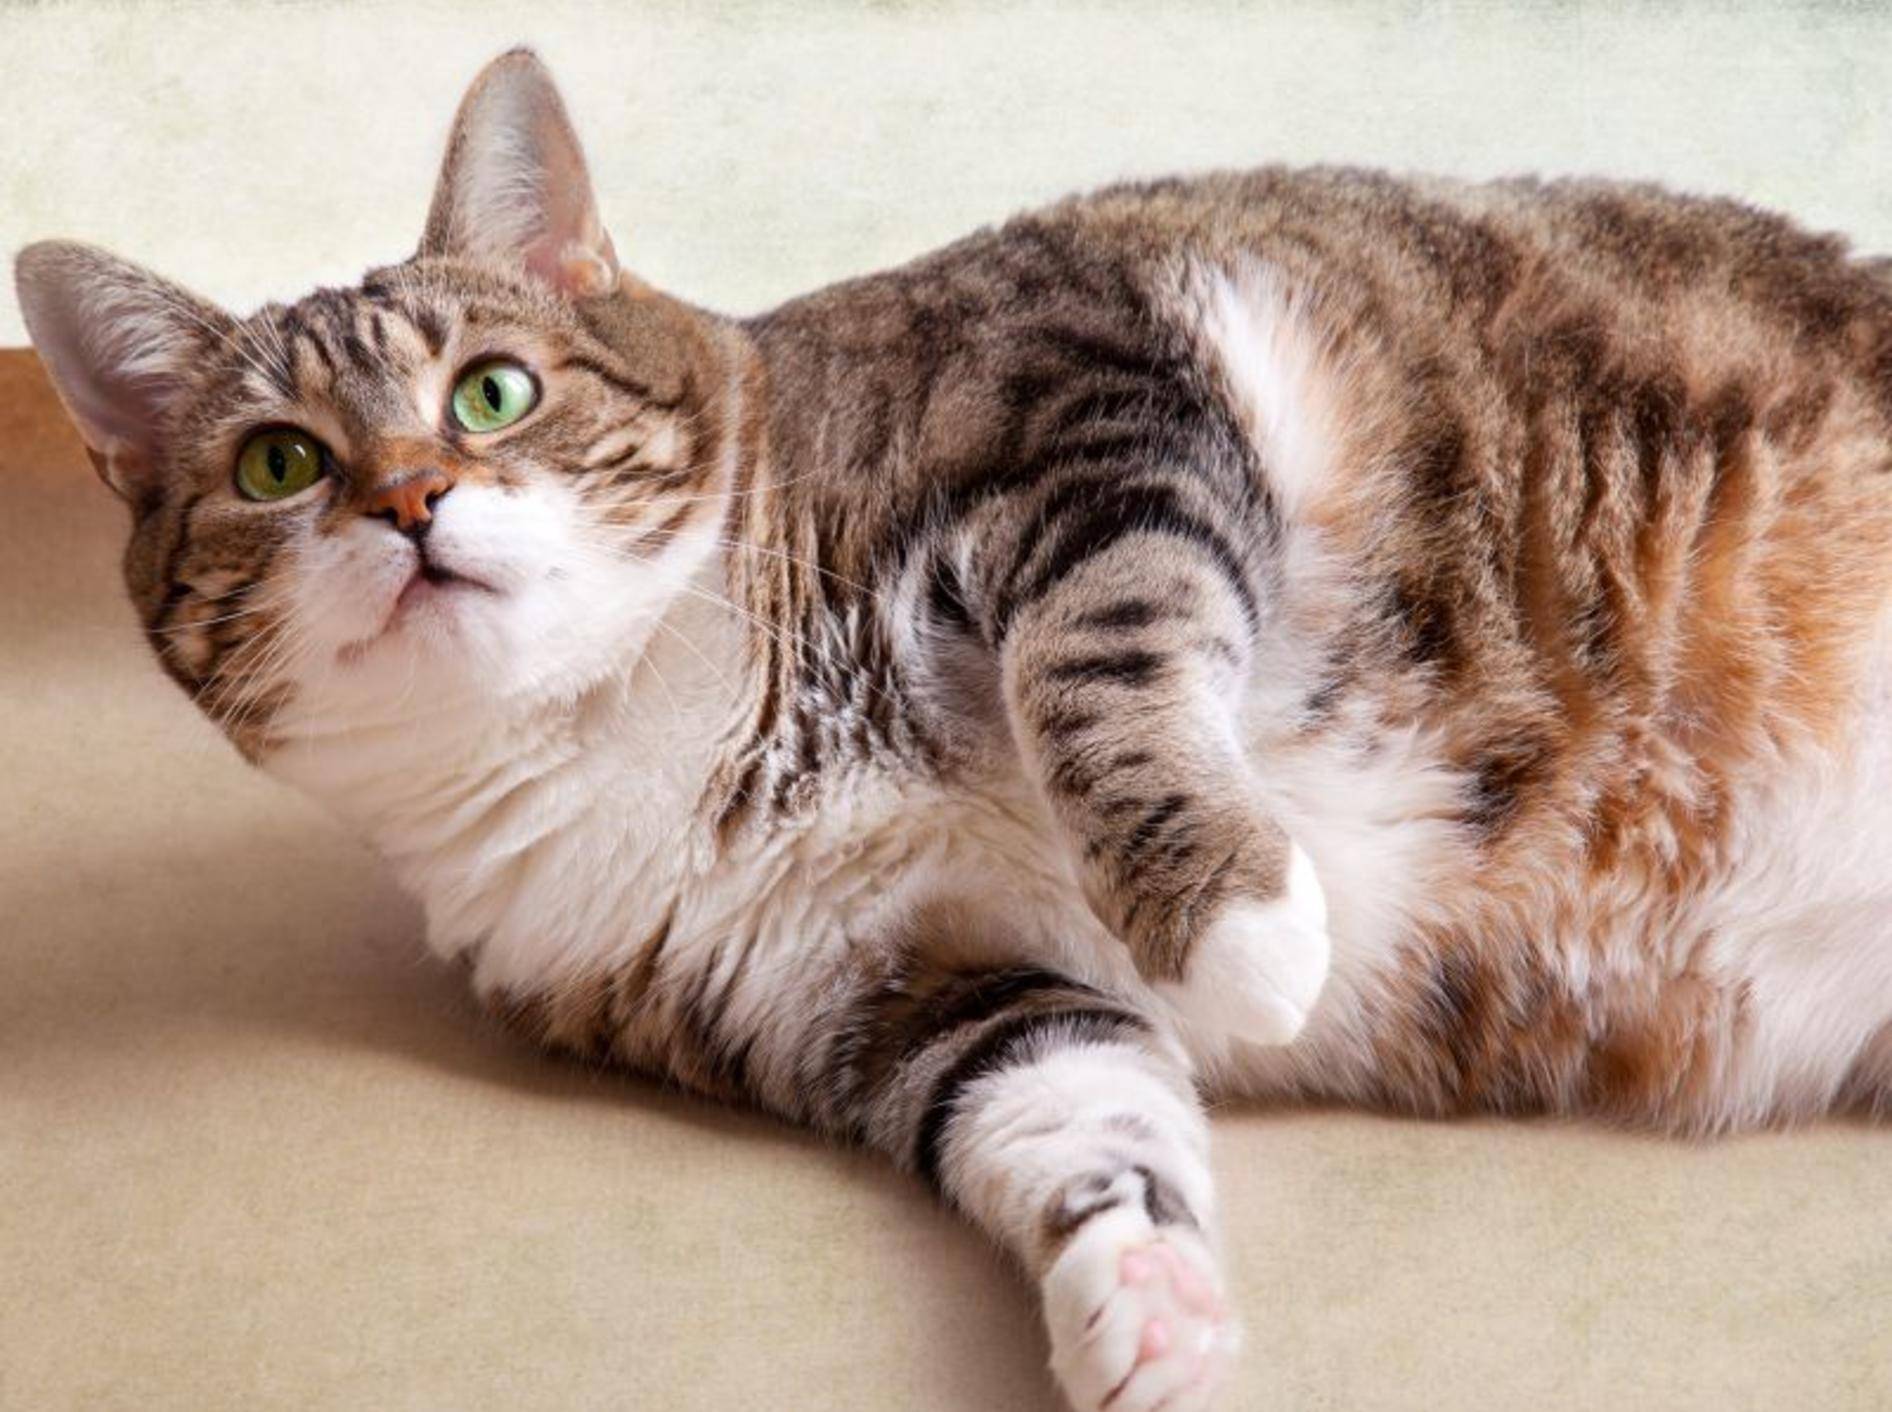 Dickes Fell oder dicke Katze? – Bild: Shutterstock / Nailia Schwarz